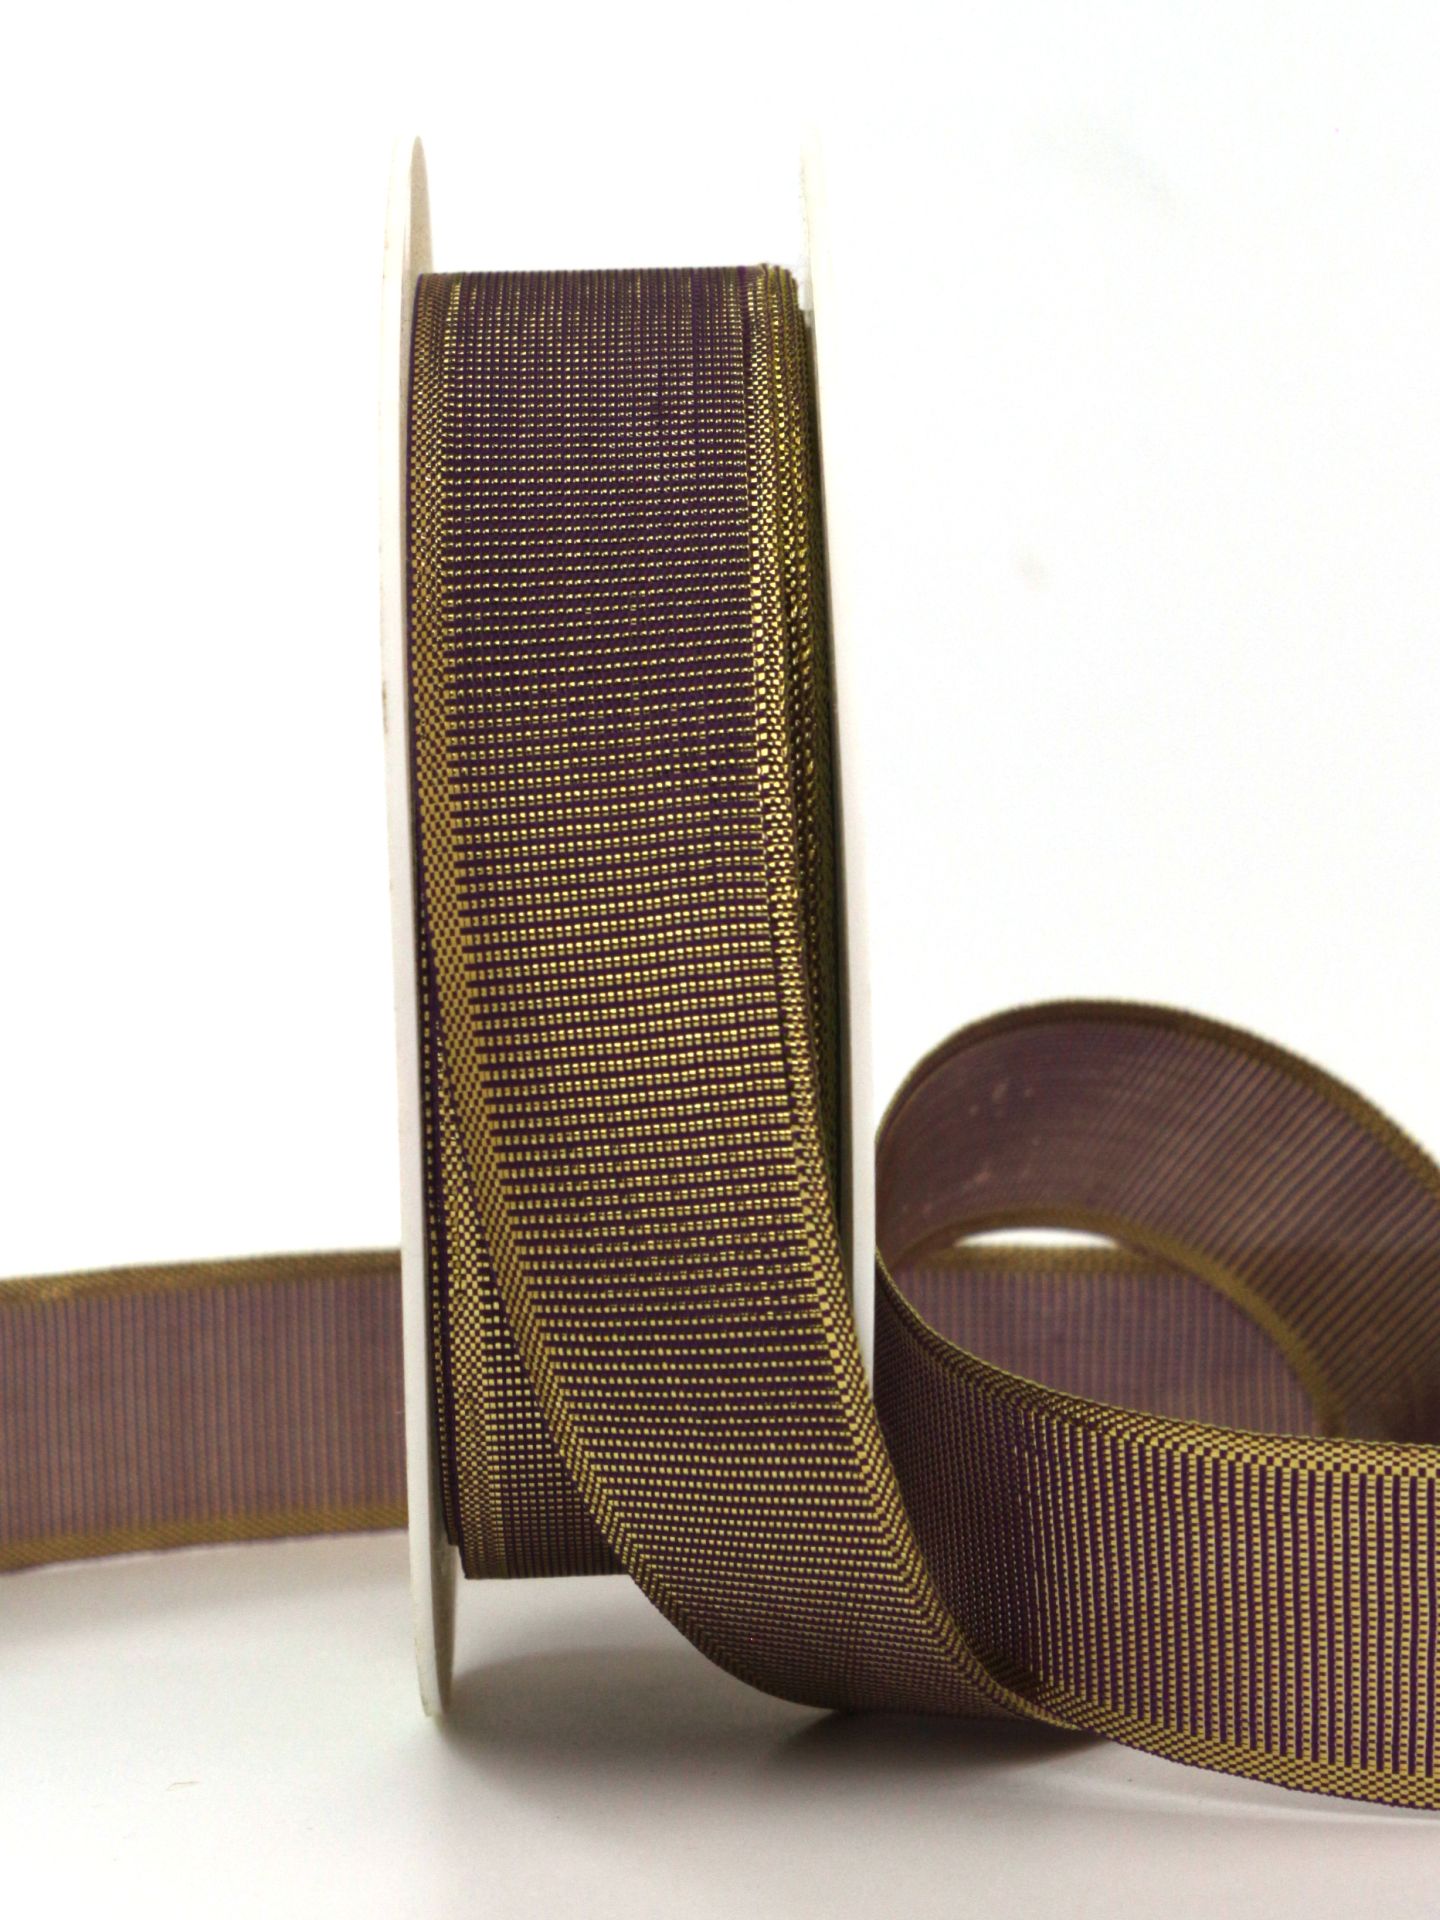 Metalic Ripsband, lila/gold, 25 mm breit, 25 m Rolle - geschenkband-weihnachten-dauersortiment, weihnachtsband, geschenkband-weihnachten, weihnachtsbaender